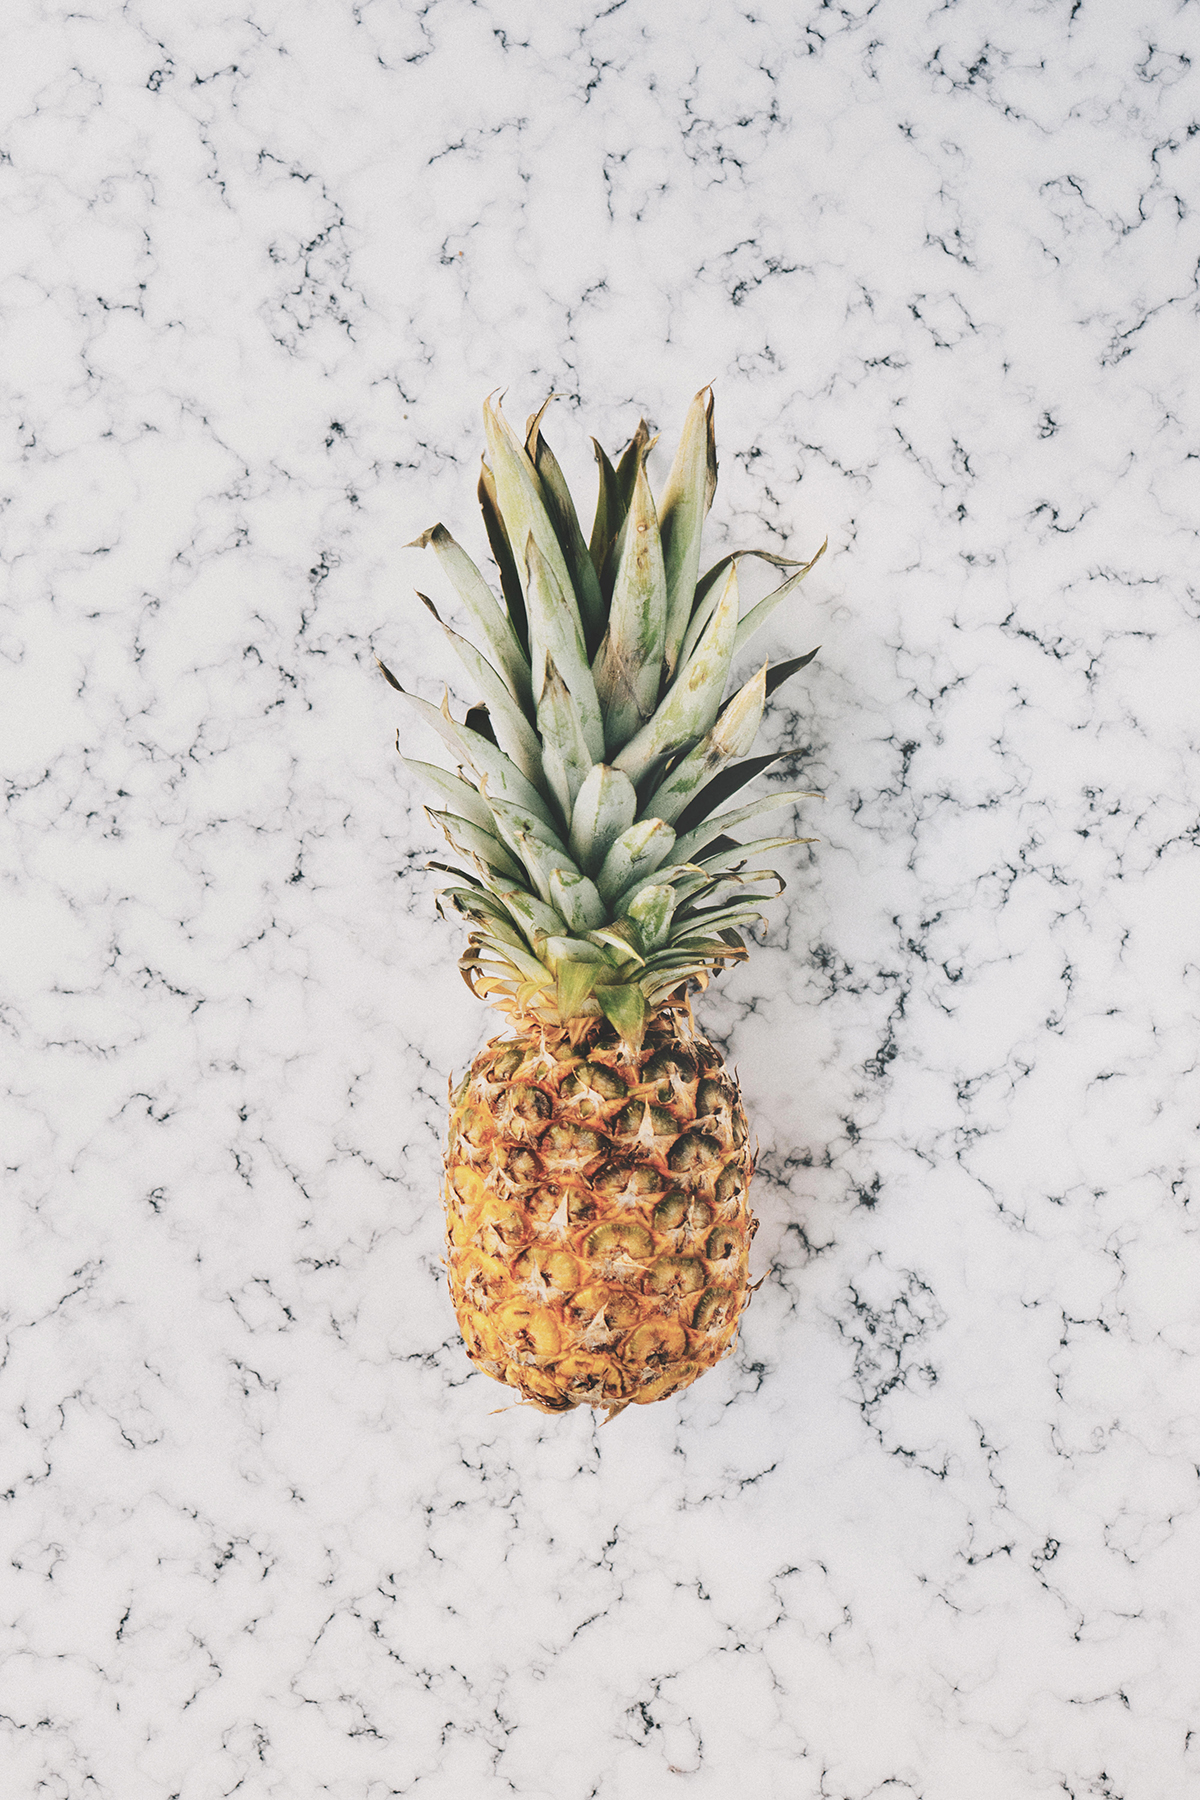 Health Benefits of Eating Pineapple